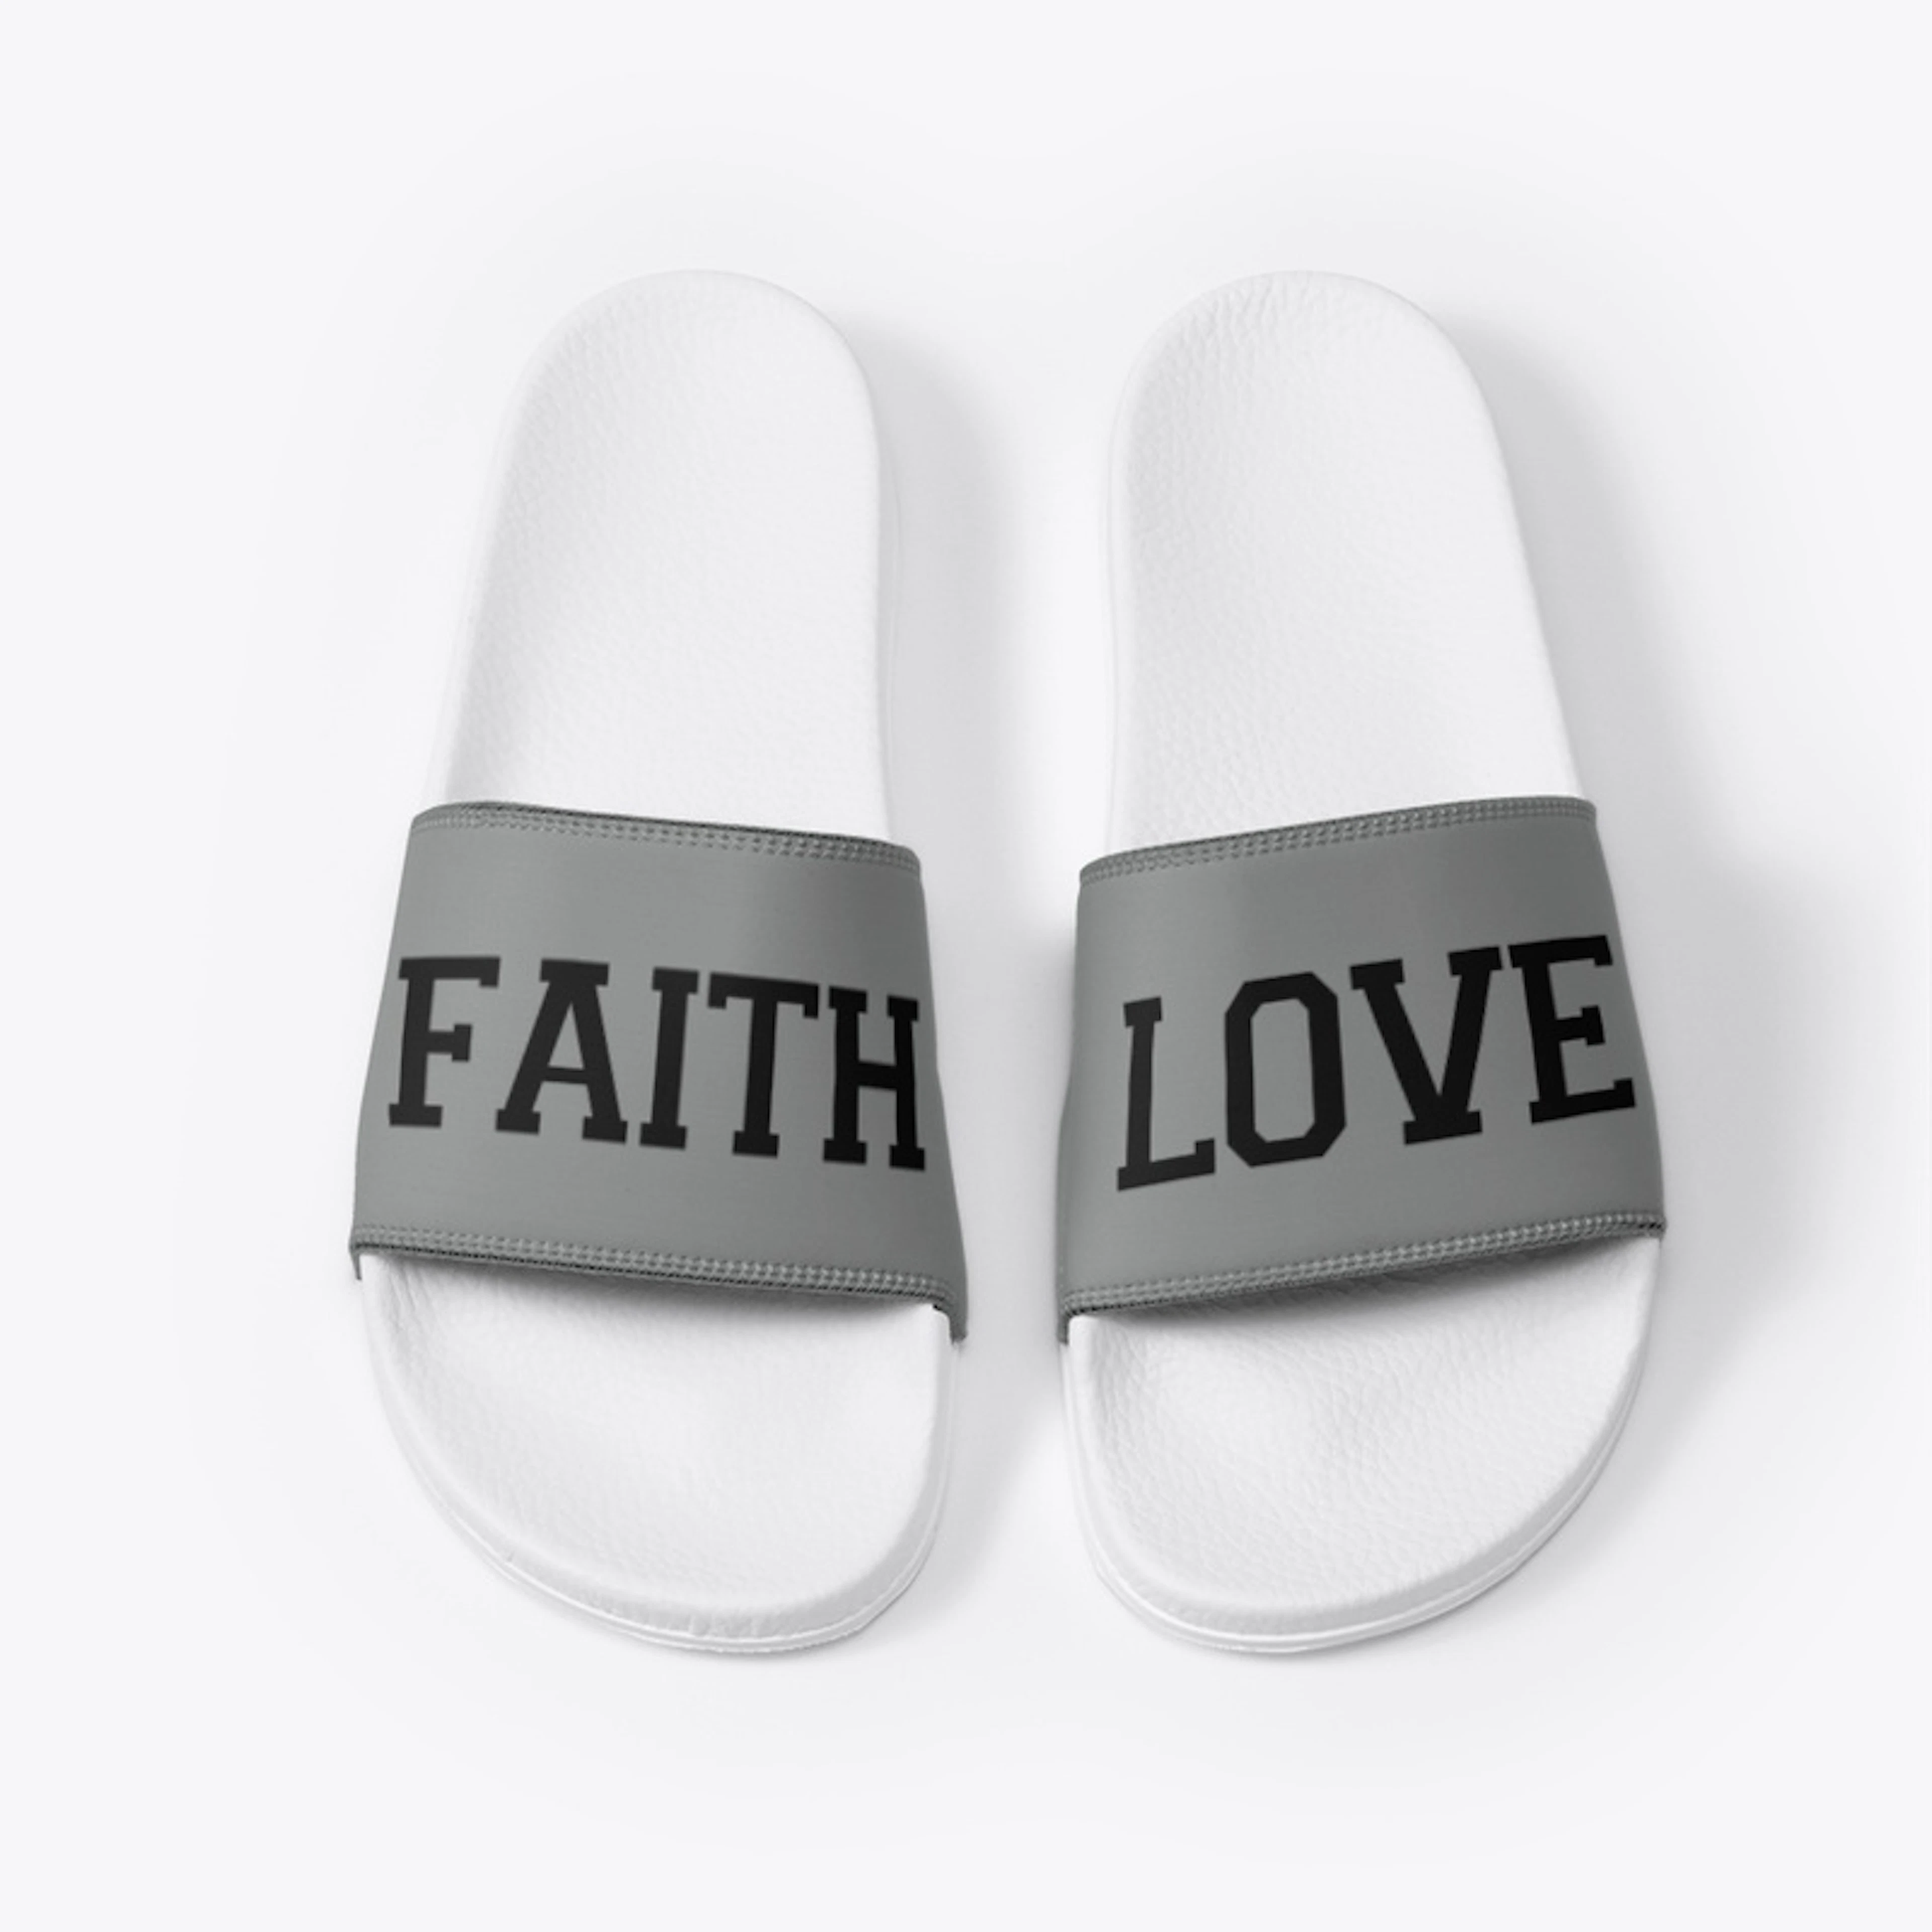 Faithful strides walking in faith&love